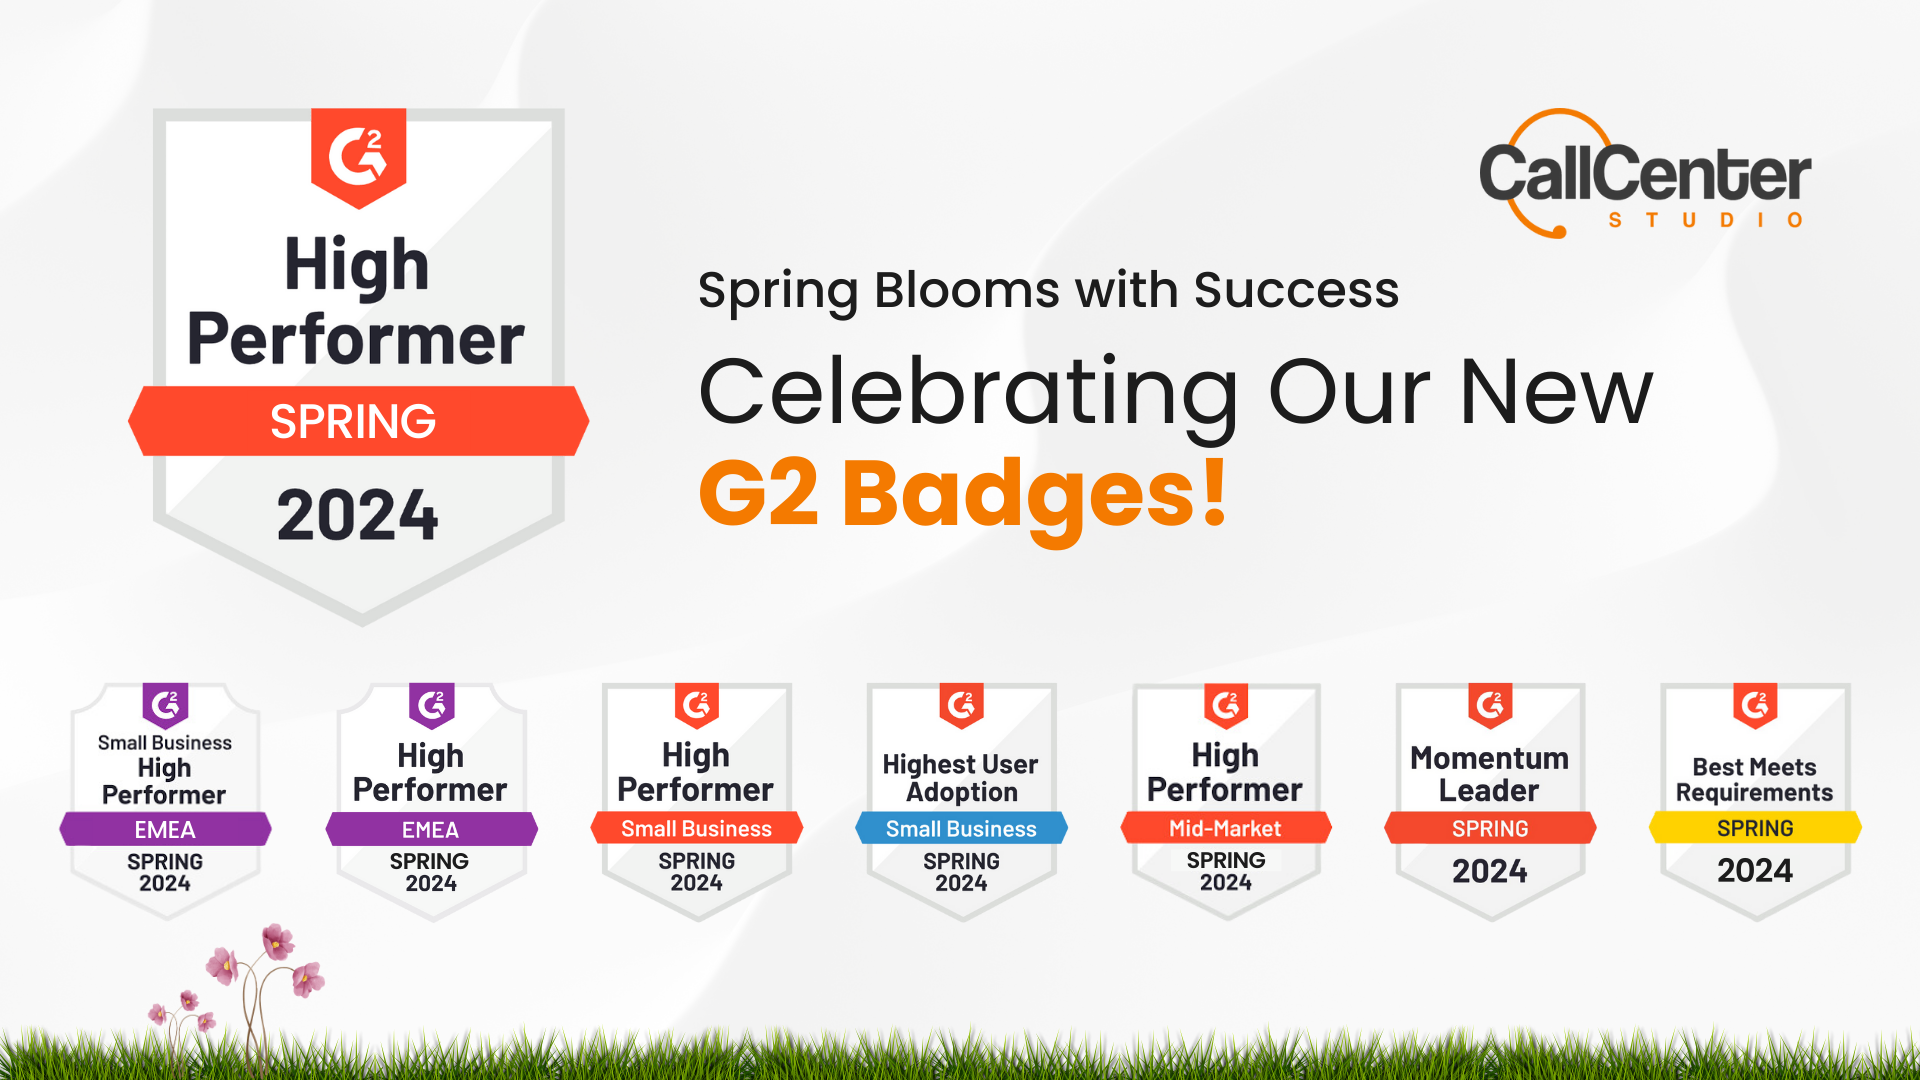 Call Center Studio got 8 badges on G2 Spring 2024 Reports!